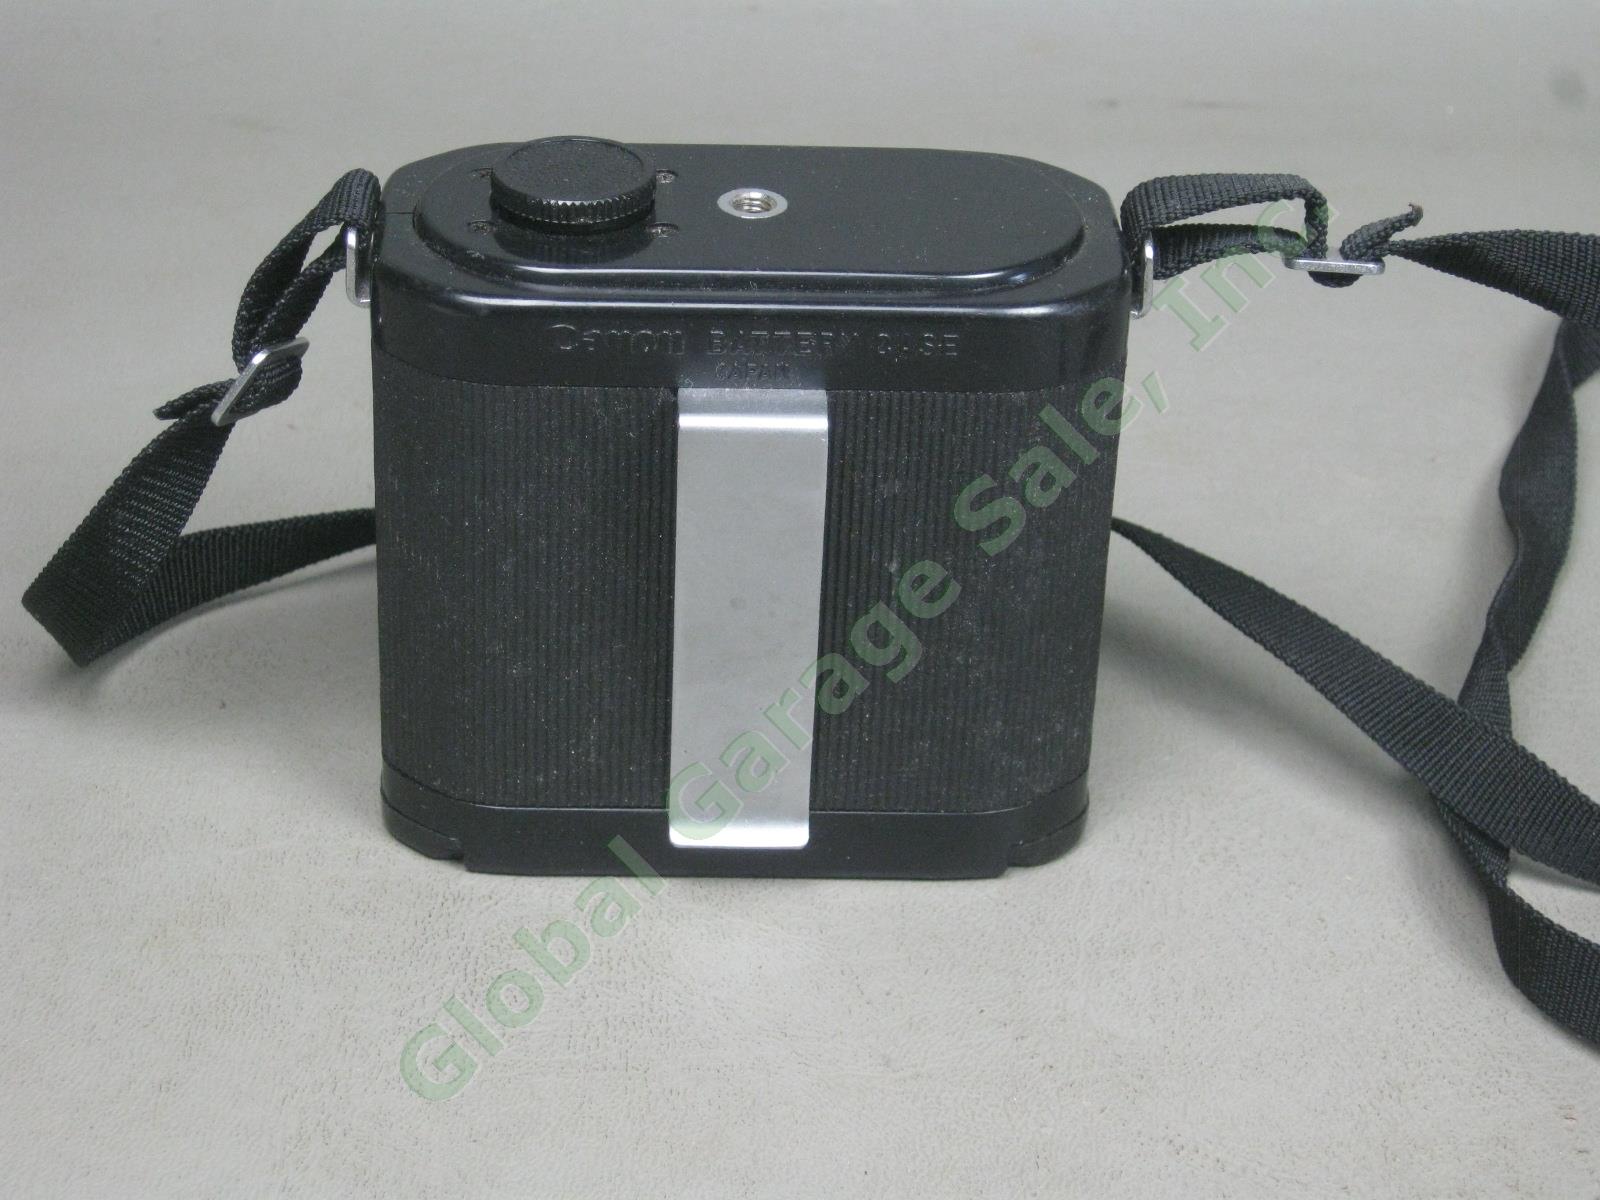 Canon Bellows FL Duplicator 8 Magnifier R Macrophoto Adapter MA-52 Camera Lot NR 19